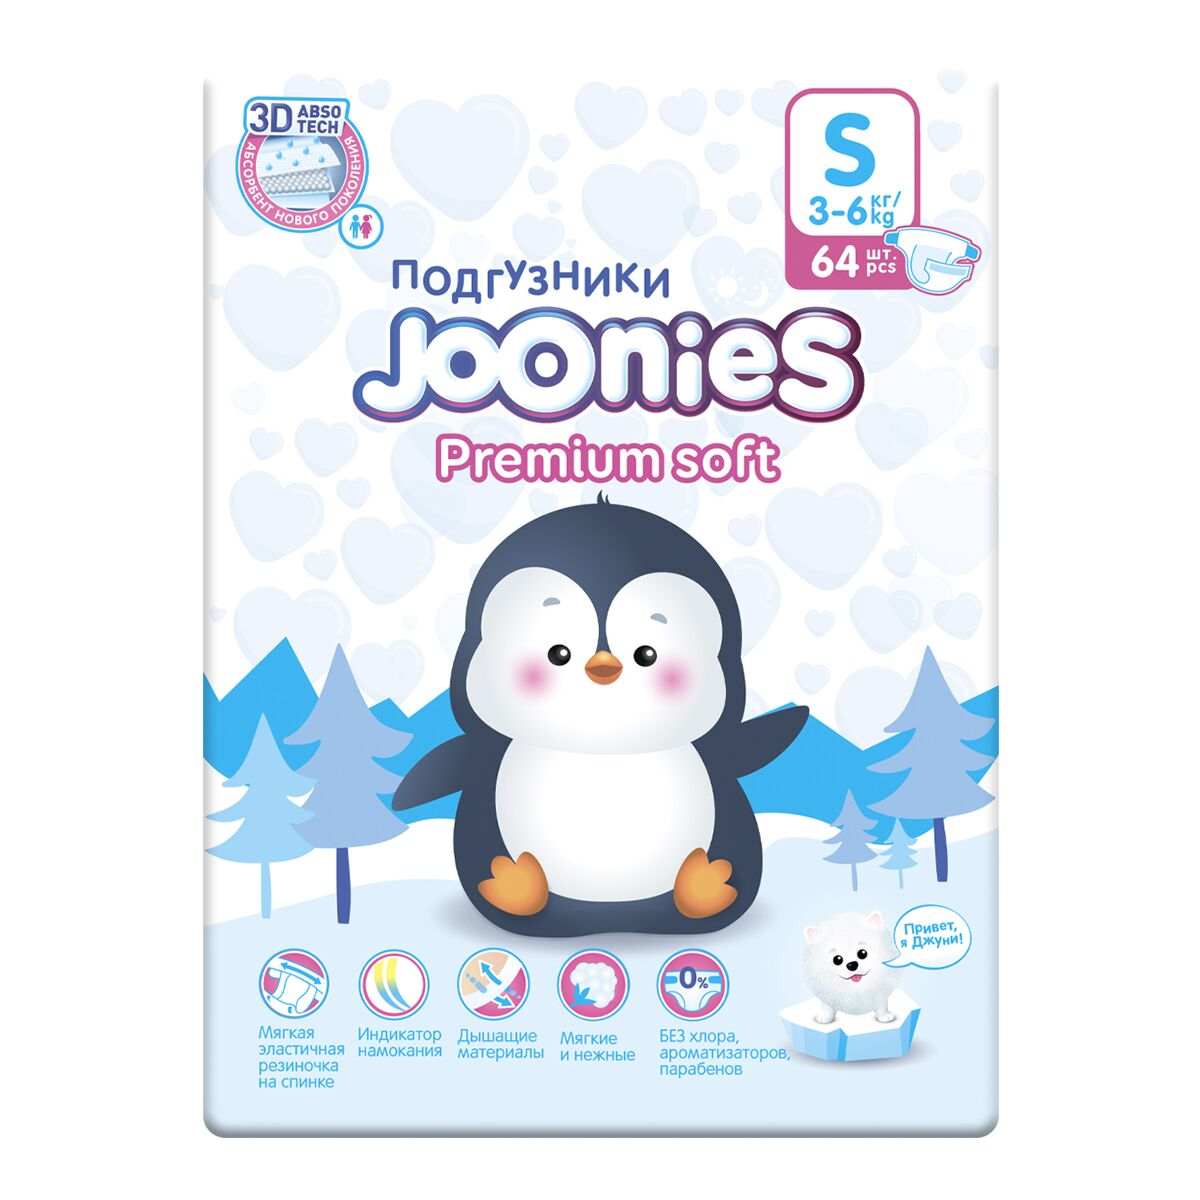 Фото Подгузники Joonies Premium Soft, размер S (3-6 кг), 64 шт 953211KZ